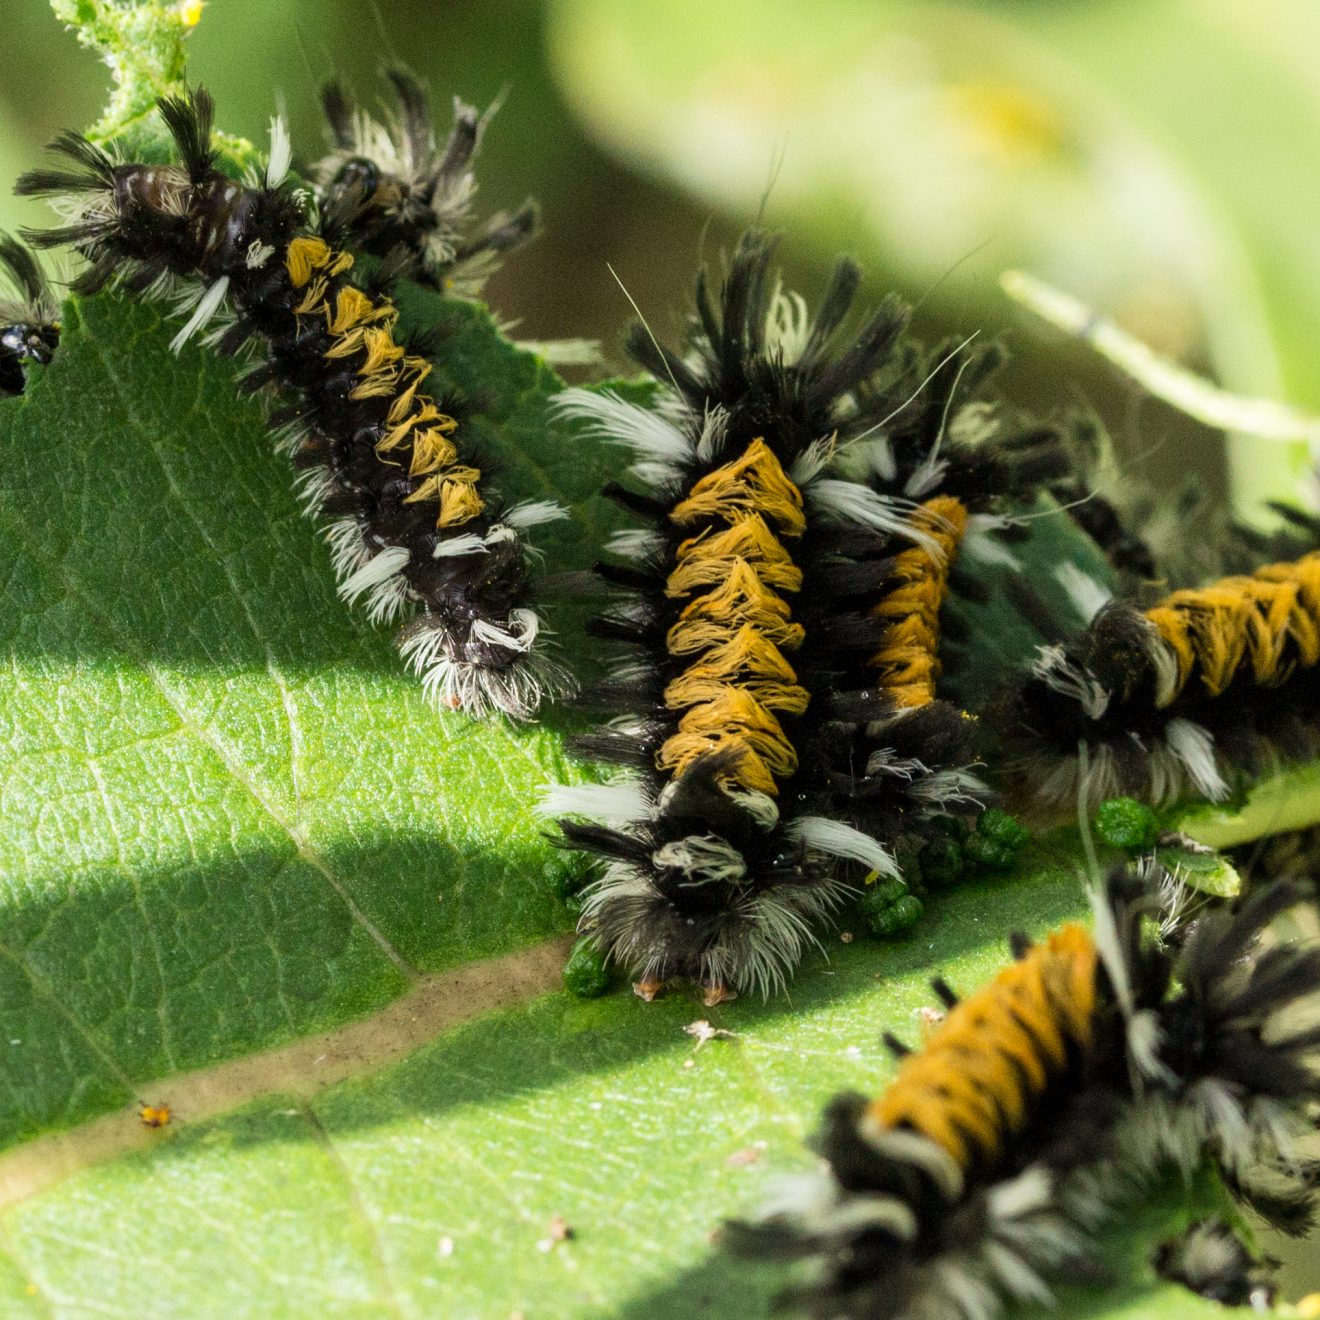 Milkweed Tussock moth caterpillars